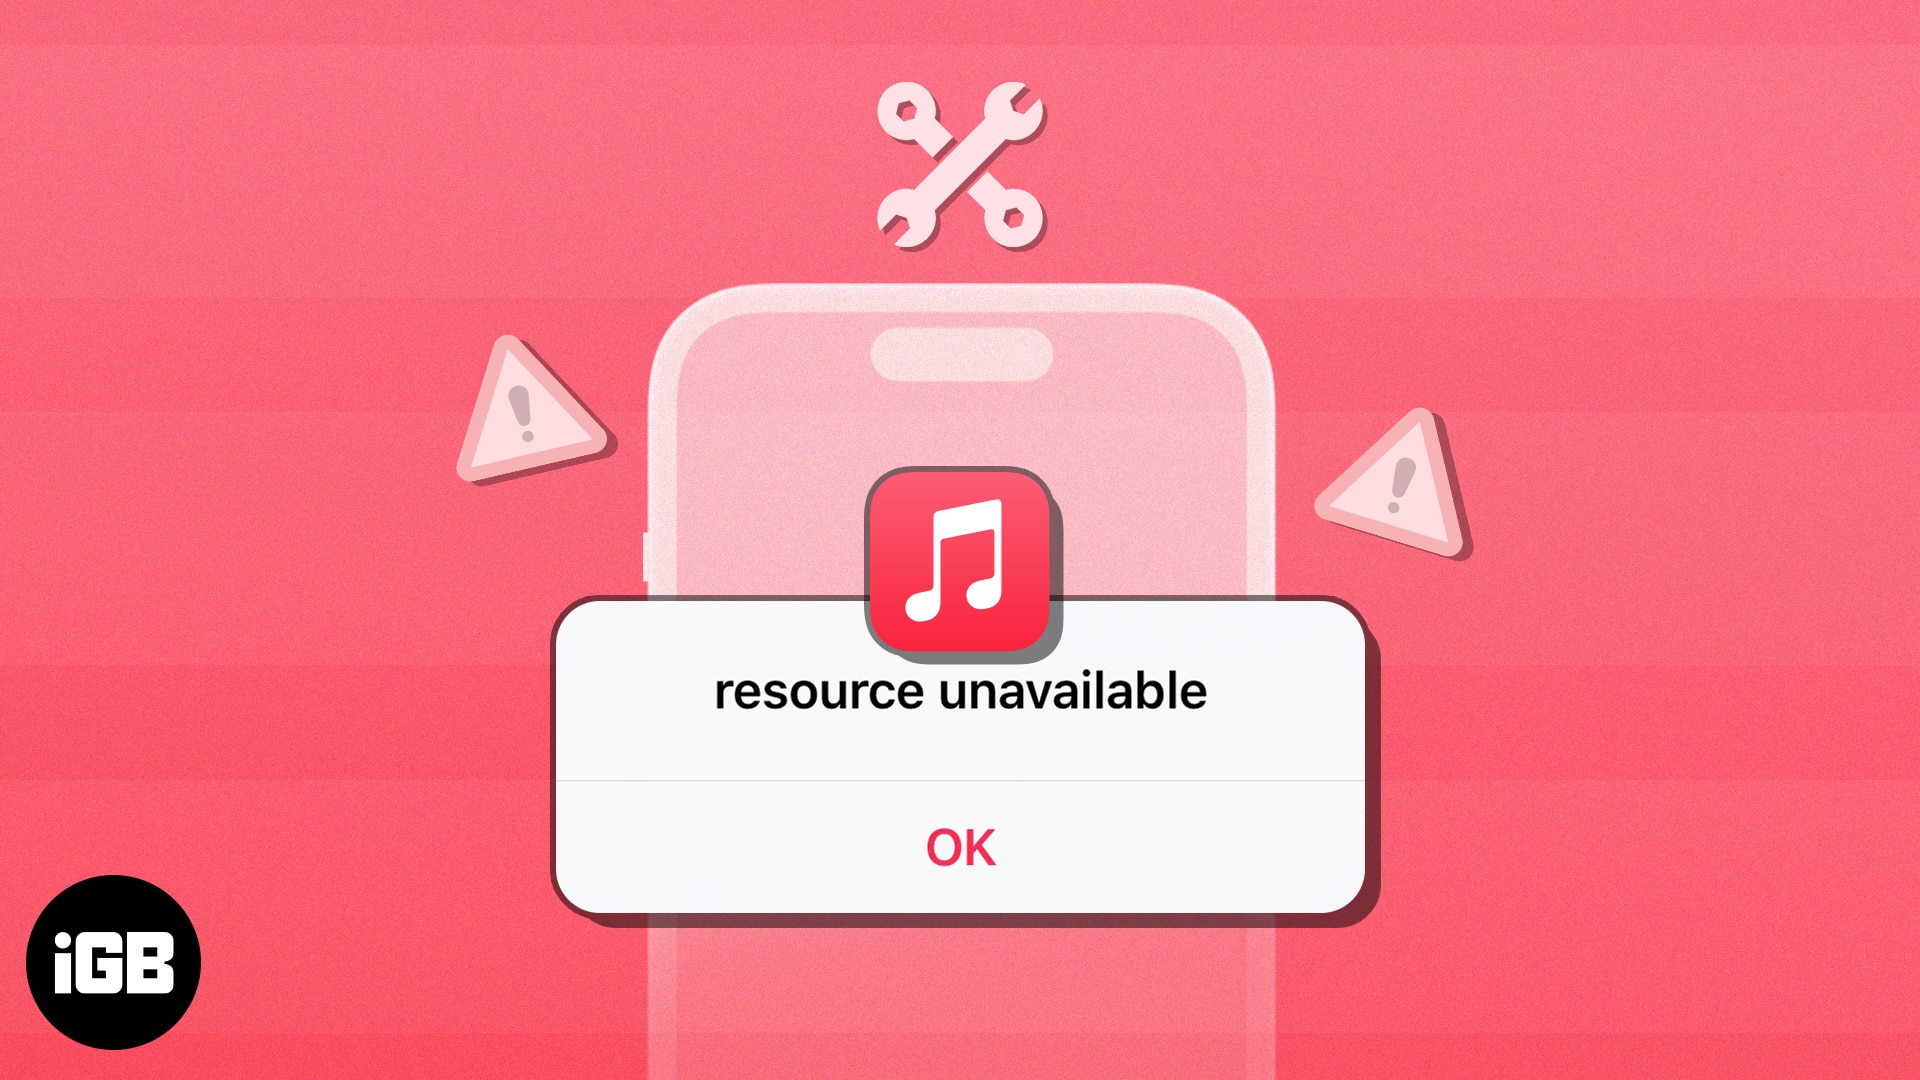 Fix resource unavailable error in apple music on iphone